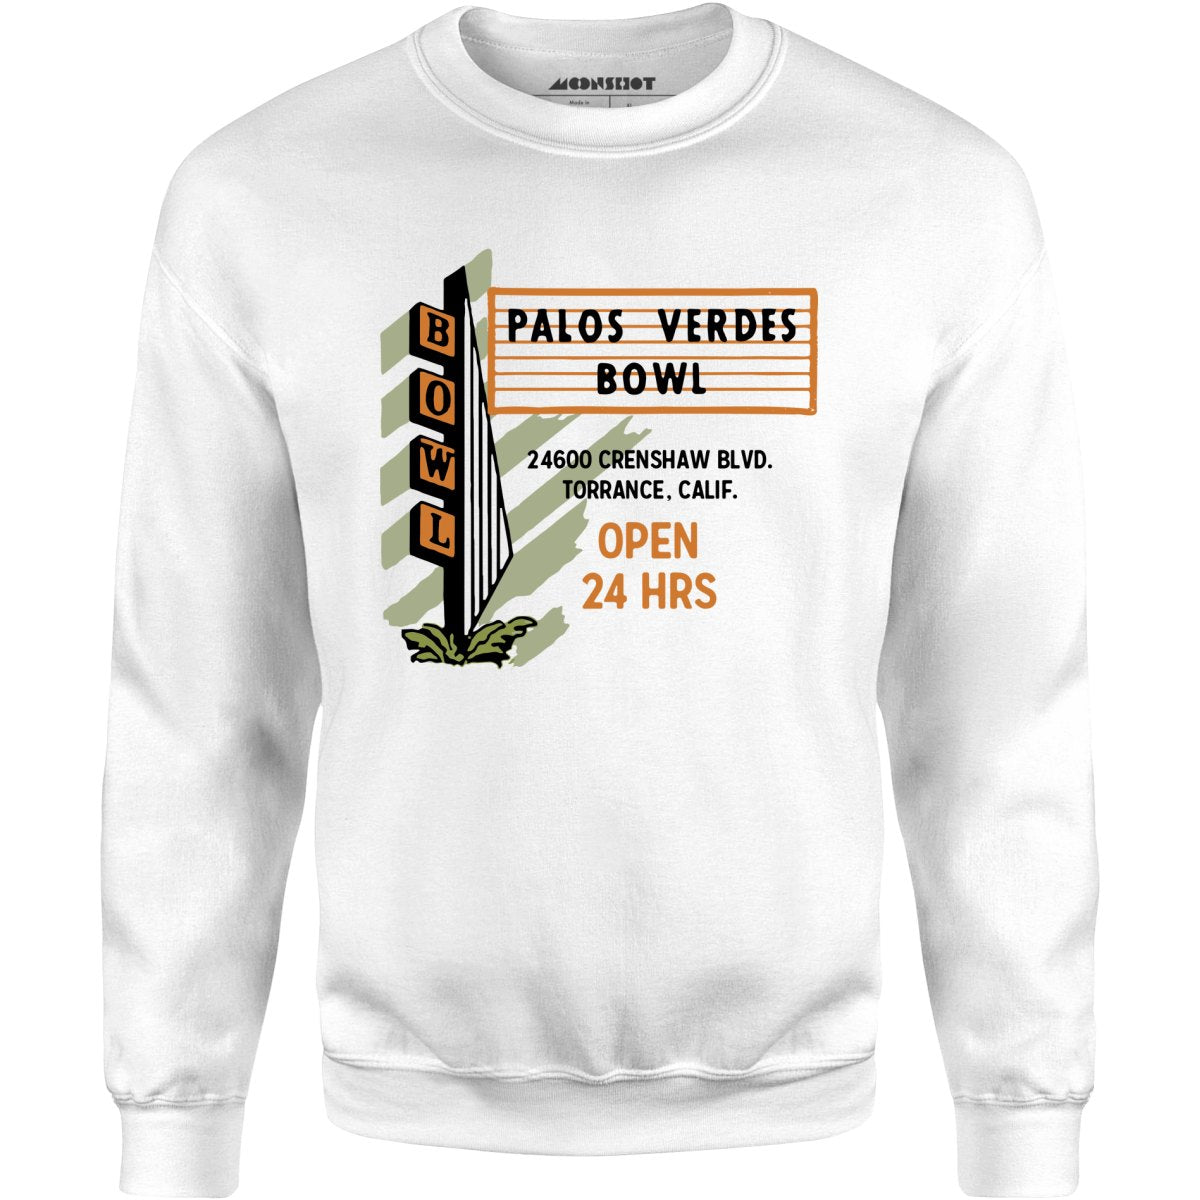 Palos Verdes Bowl - Torrance, CA - Vintage Bowling Alley - Unisex Sweatshirt